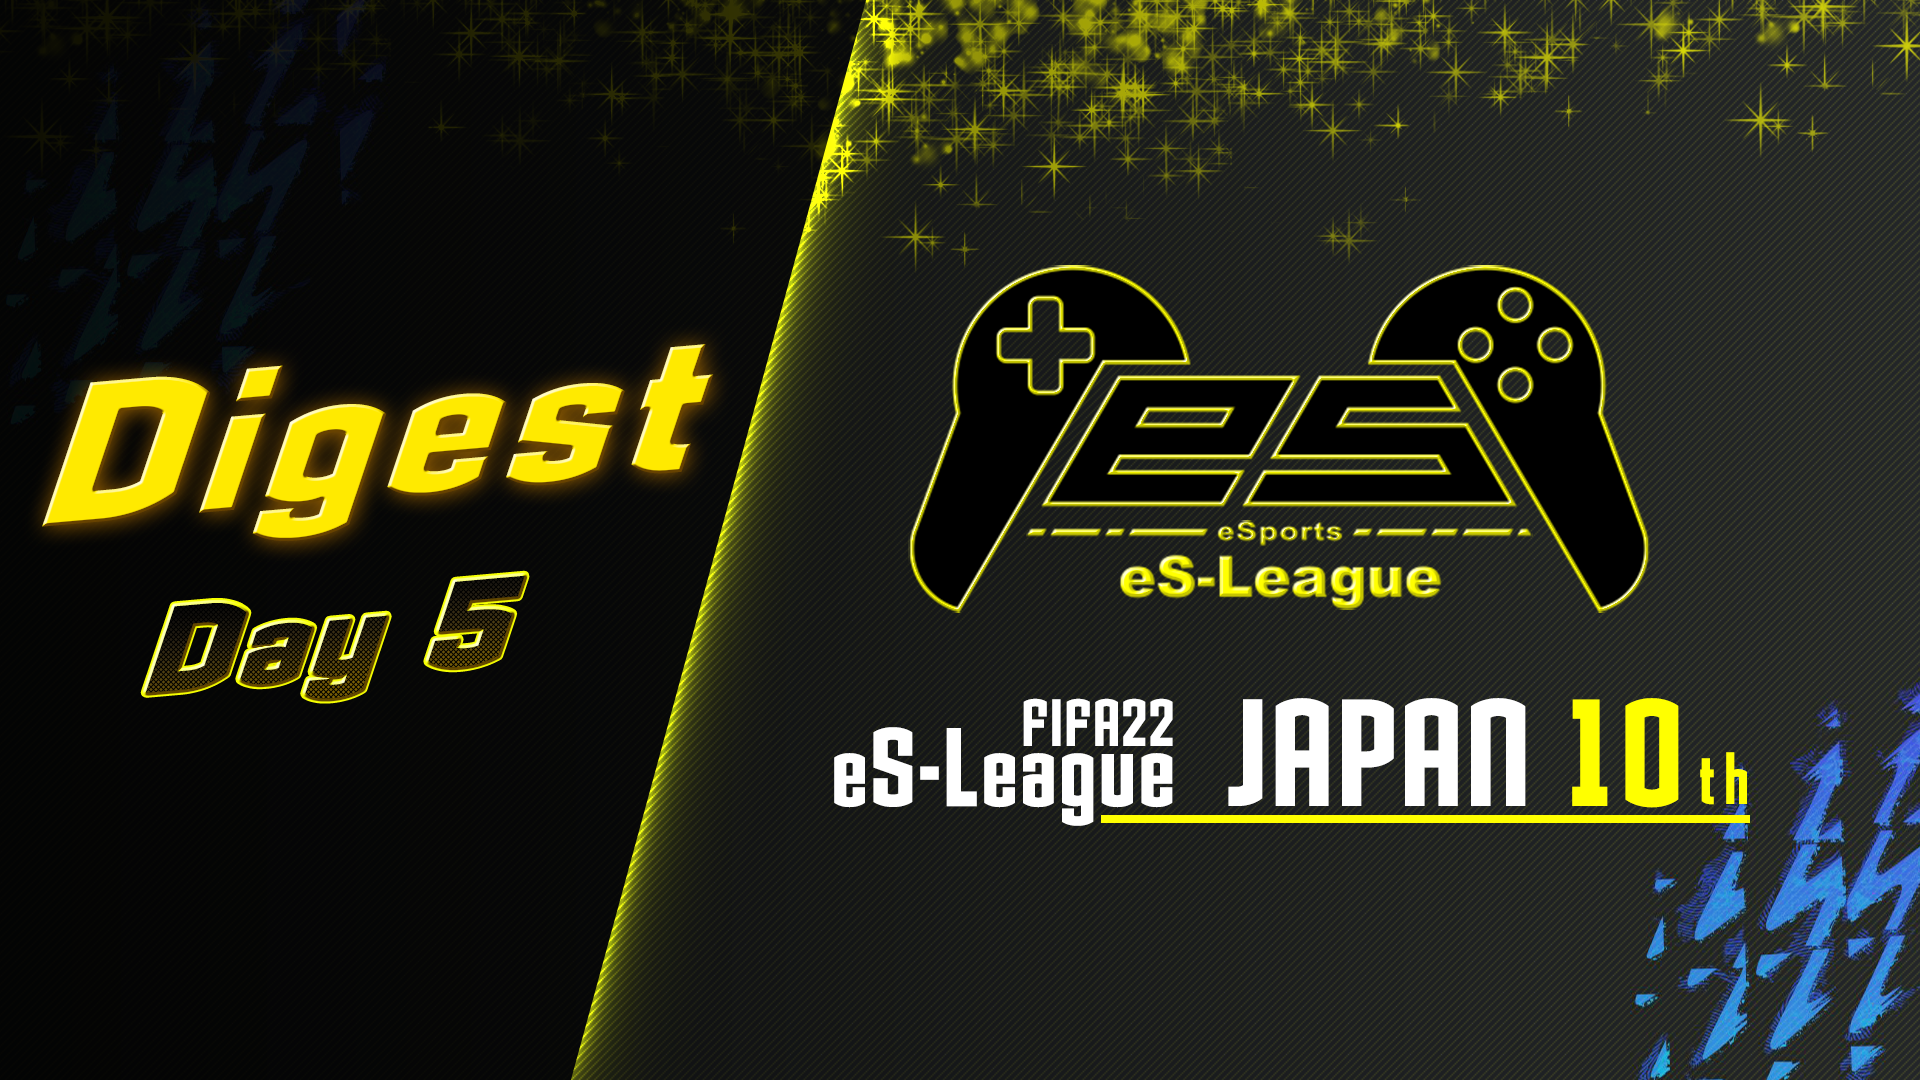 FIFA22 eS-League JAPAN 10th DAY5 ダイジェスト